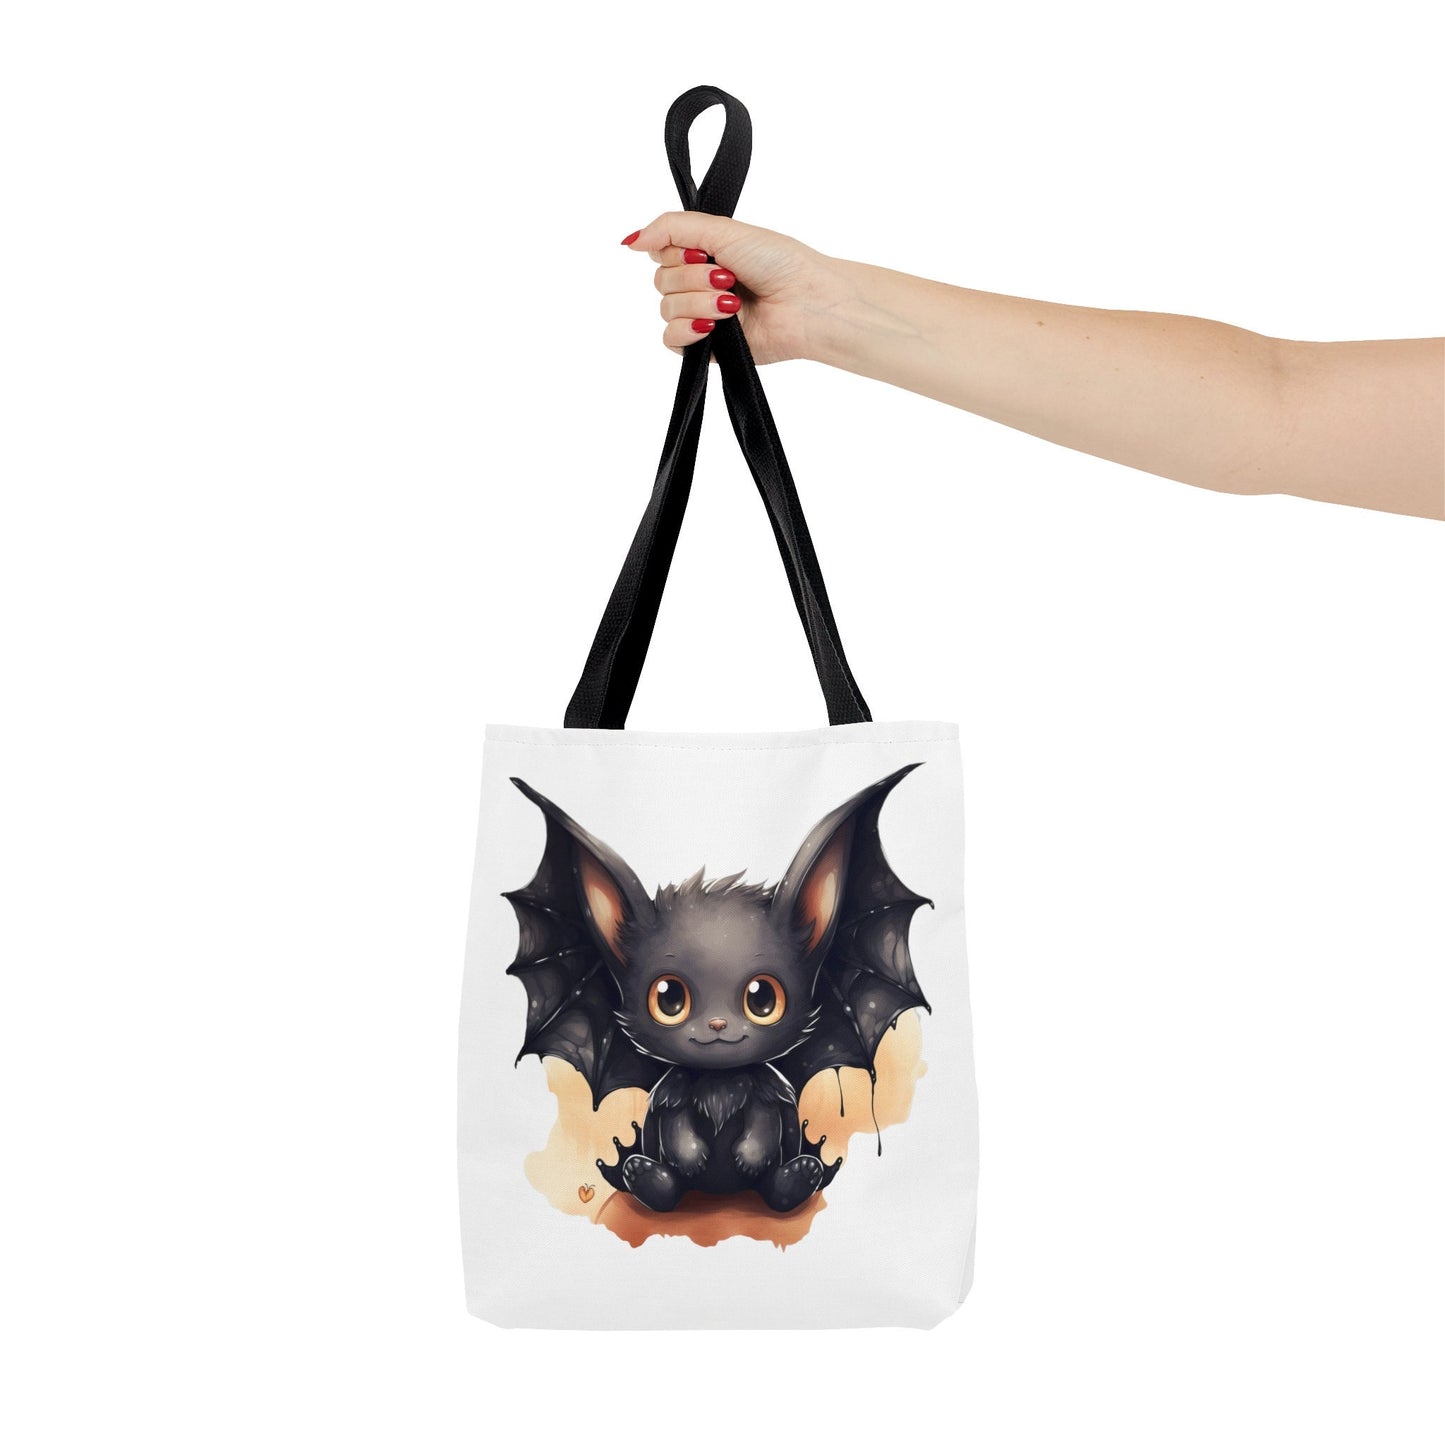 Adorable Tote bag with cute Bat, Bat Tote bag for any Occasion, Cute Bat Tote bag perfect for Halloween, Men's, Womens, Kids Tote bag